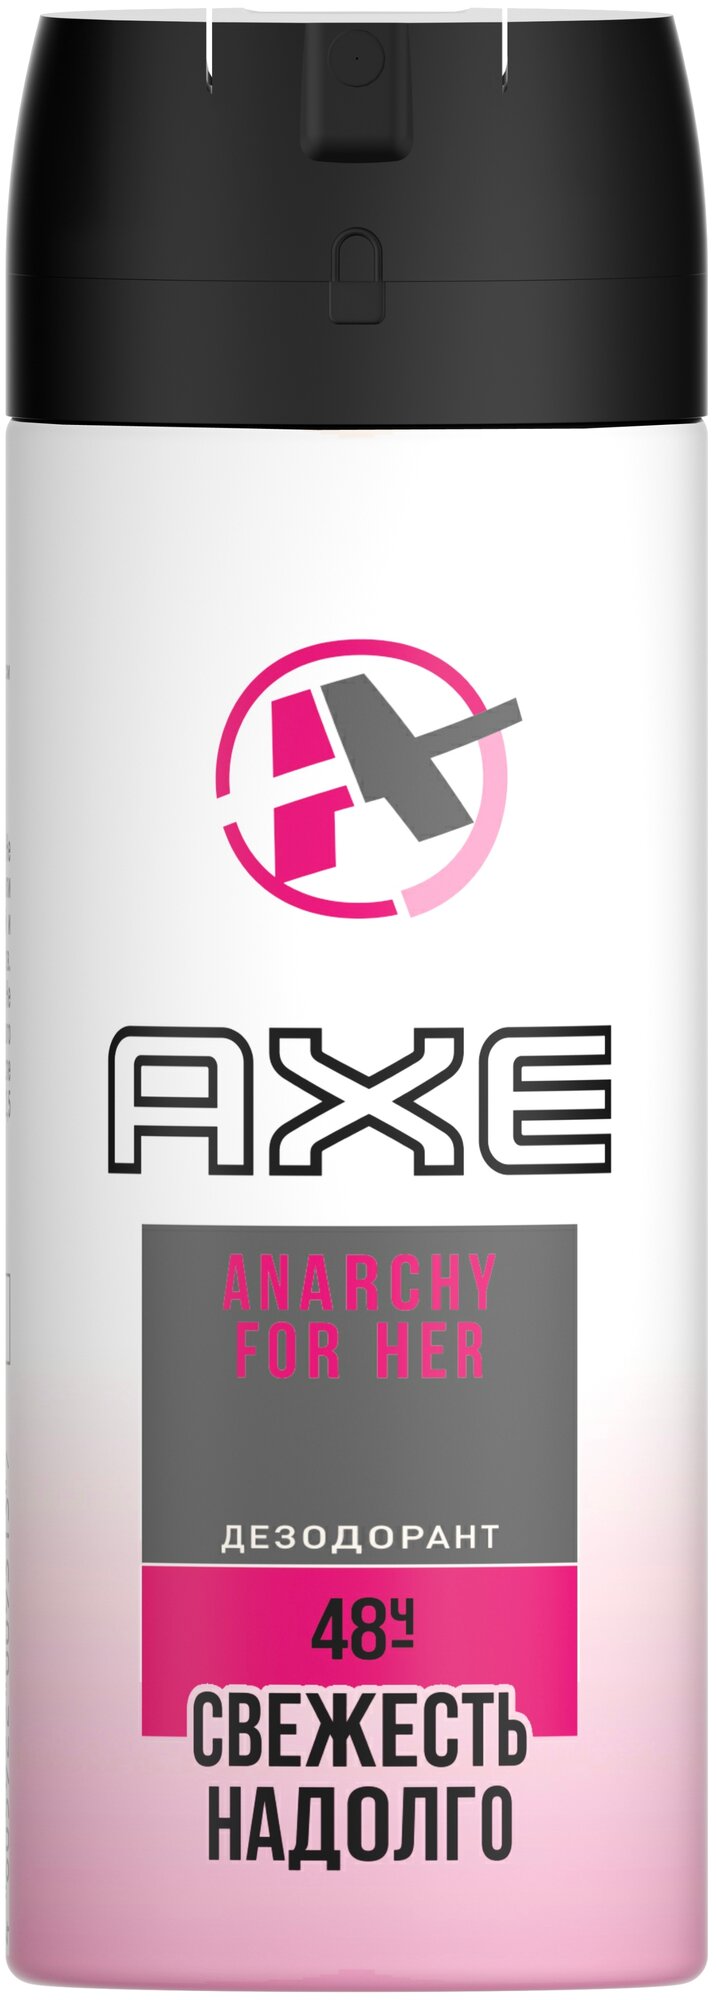 Дезодорант AXE Anarchy для нее Limited Edition 150мл Unilever - фото №3